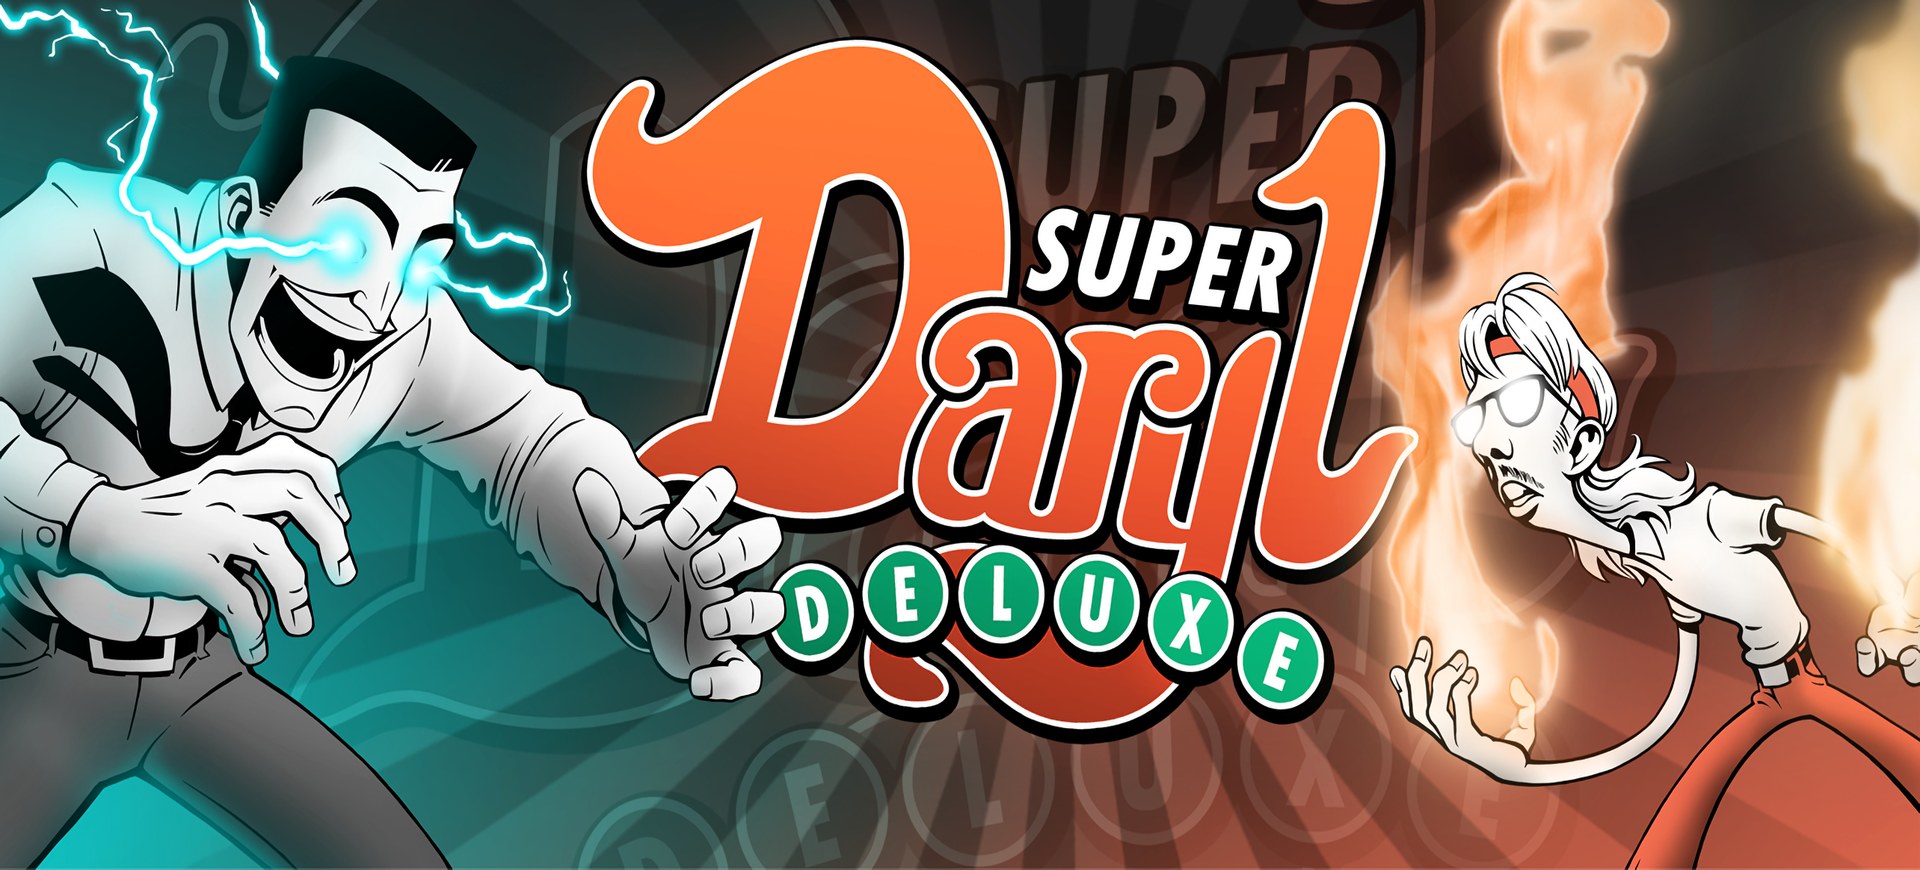 Super Daryl Deluxe ra mắt năm 2018 - Tin Game